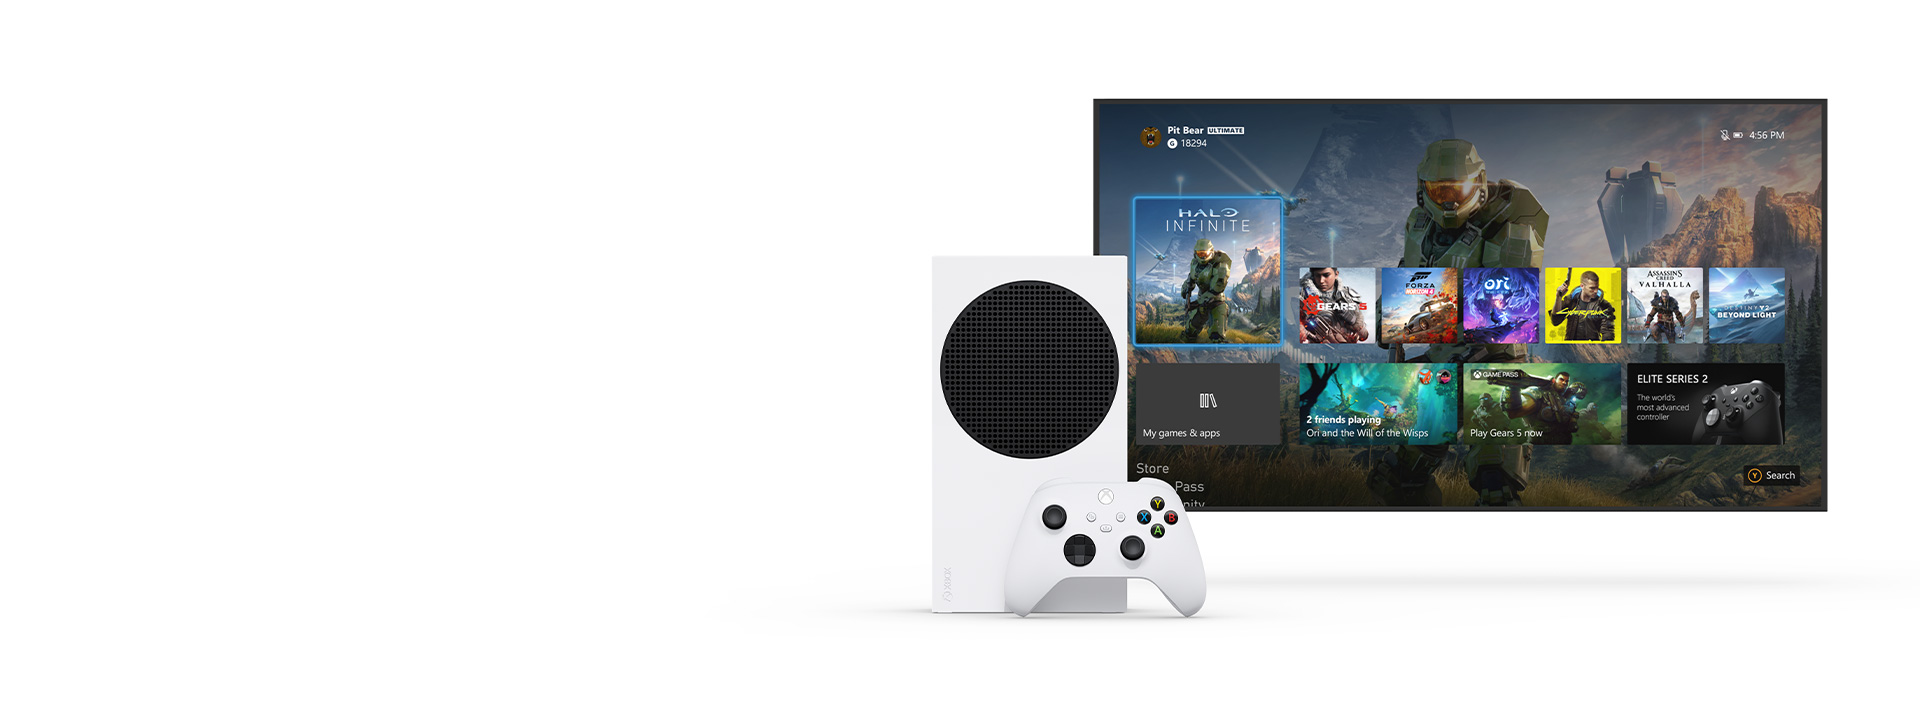 Xbox Series S 放在電視旁邊，顯示全新的 Xbox 設定畫面。